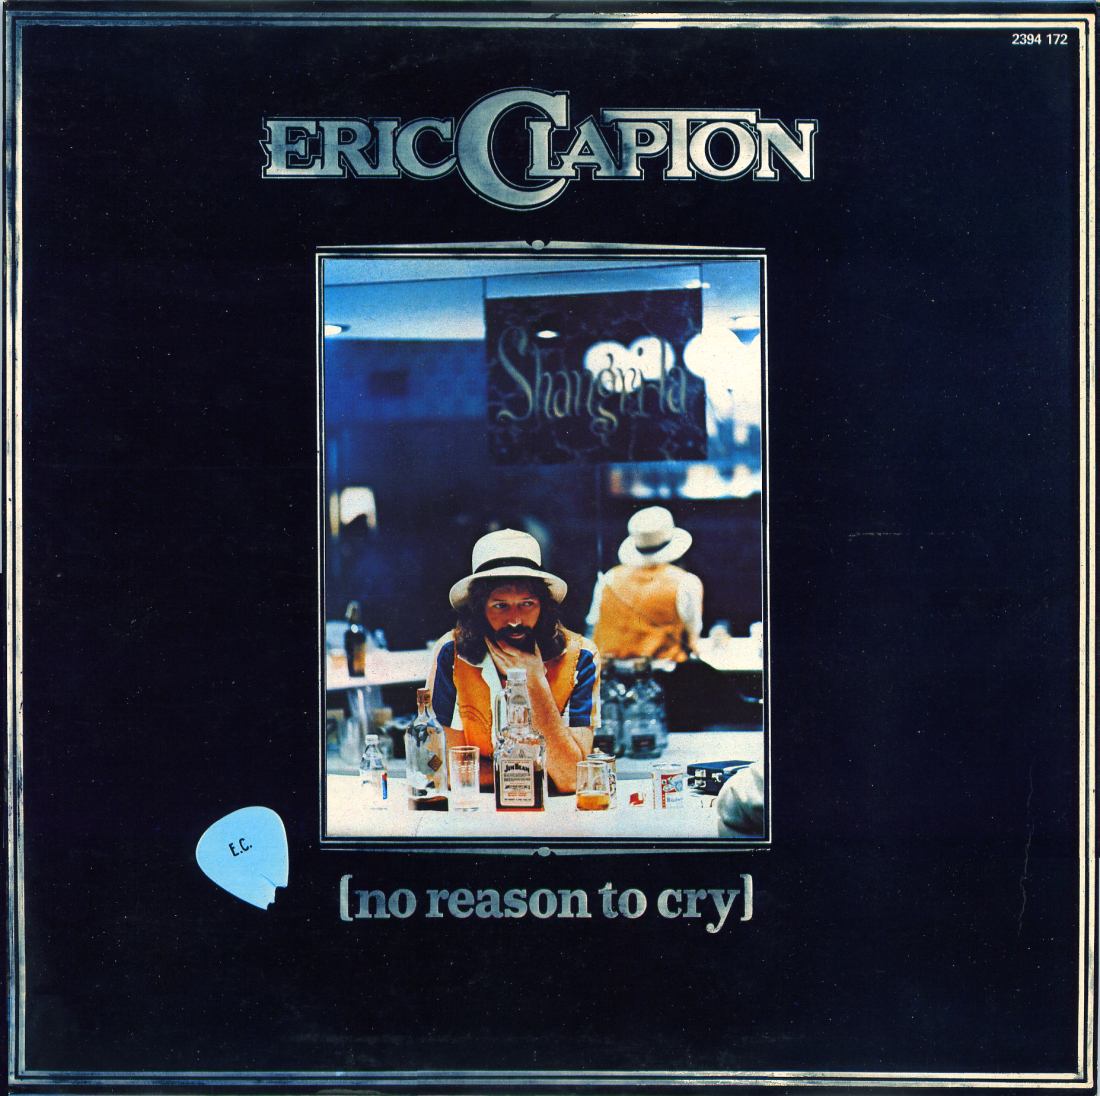 Eric Clapton_No reason to cry_1